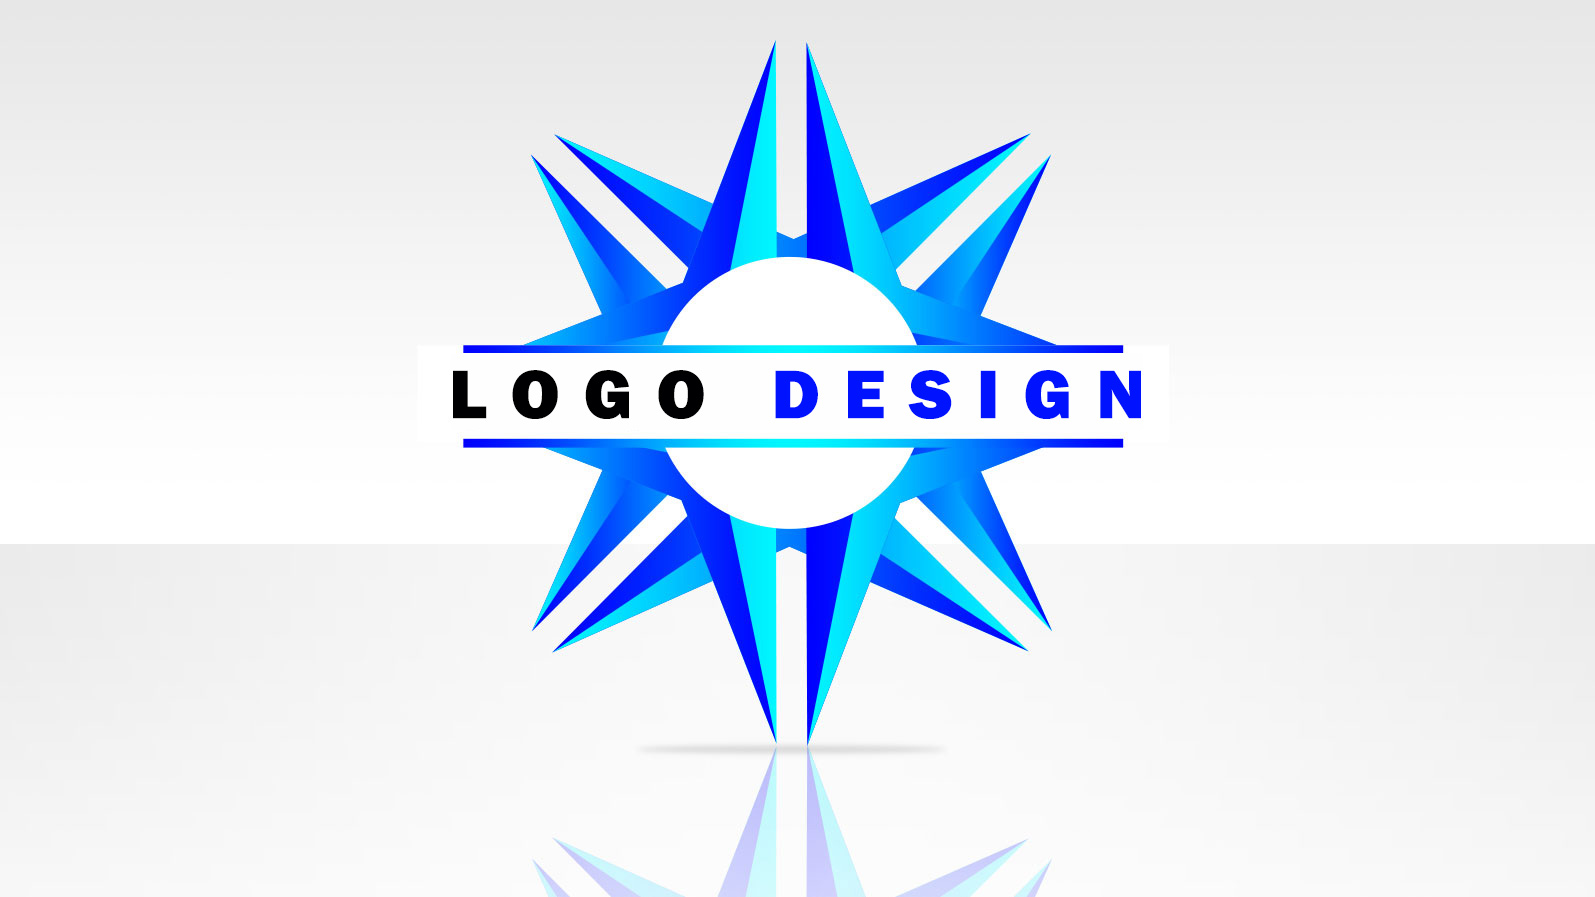 designing logo in illustrator